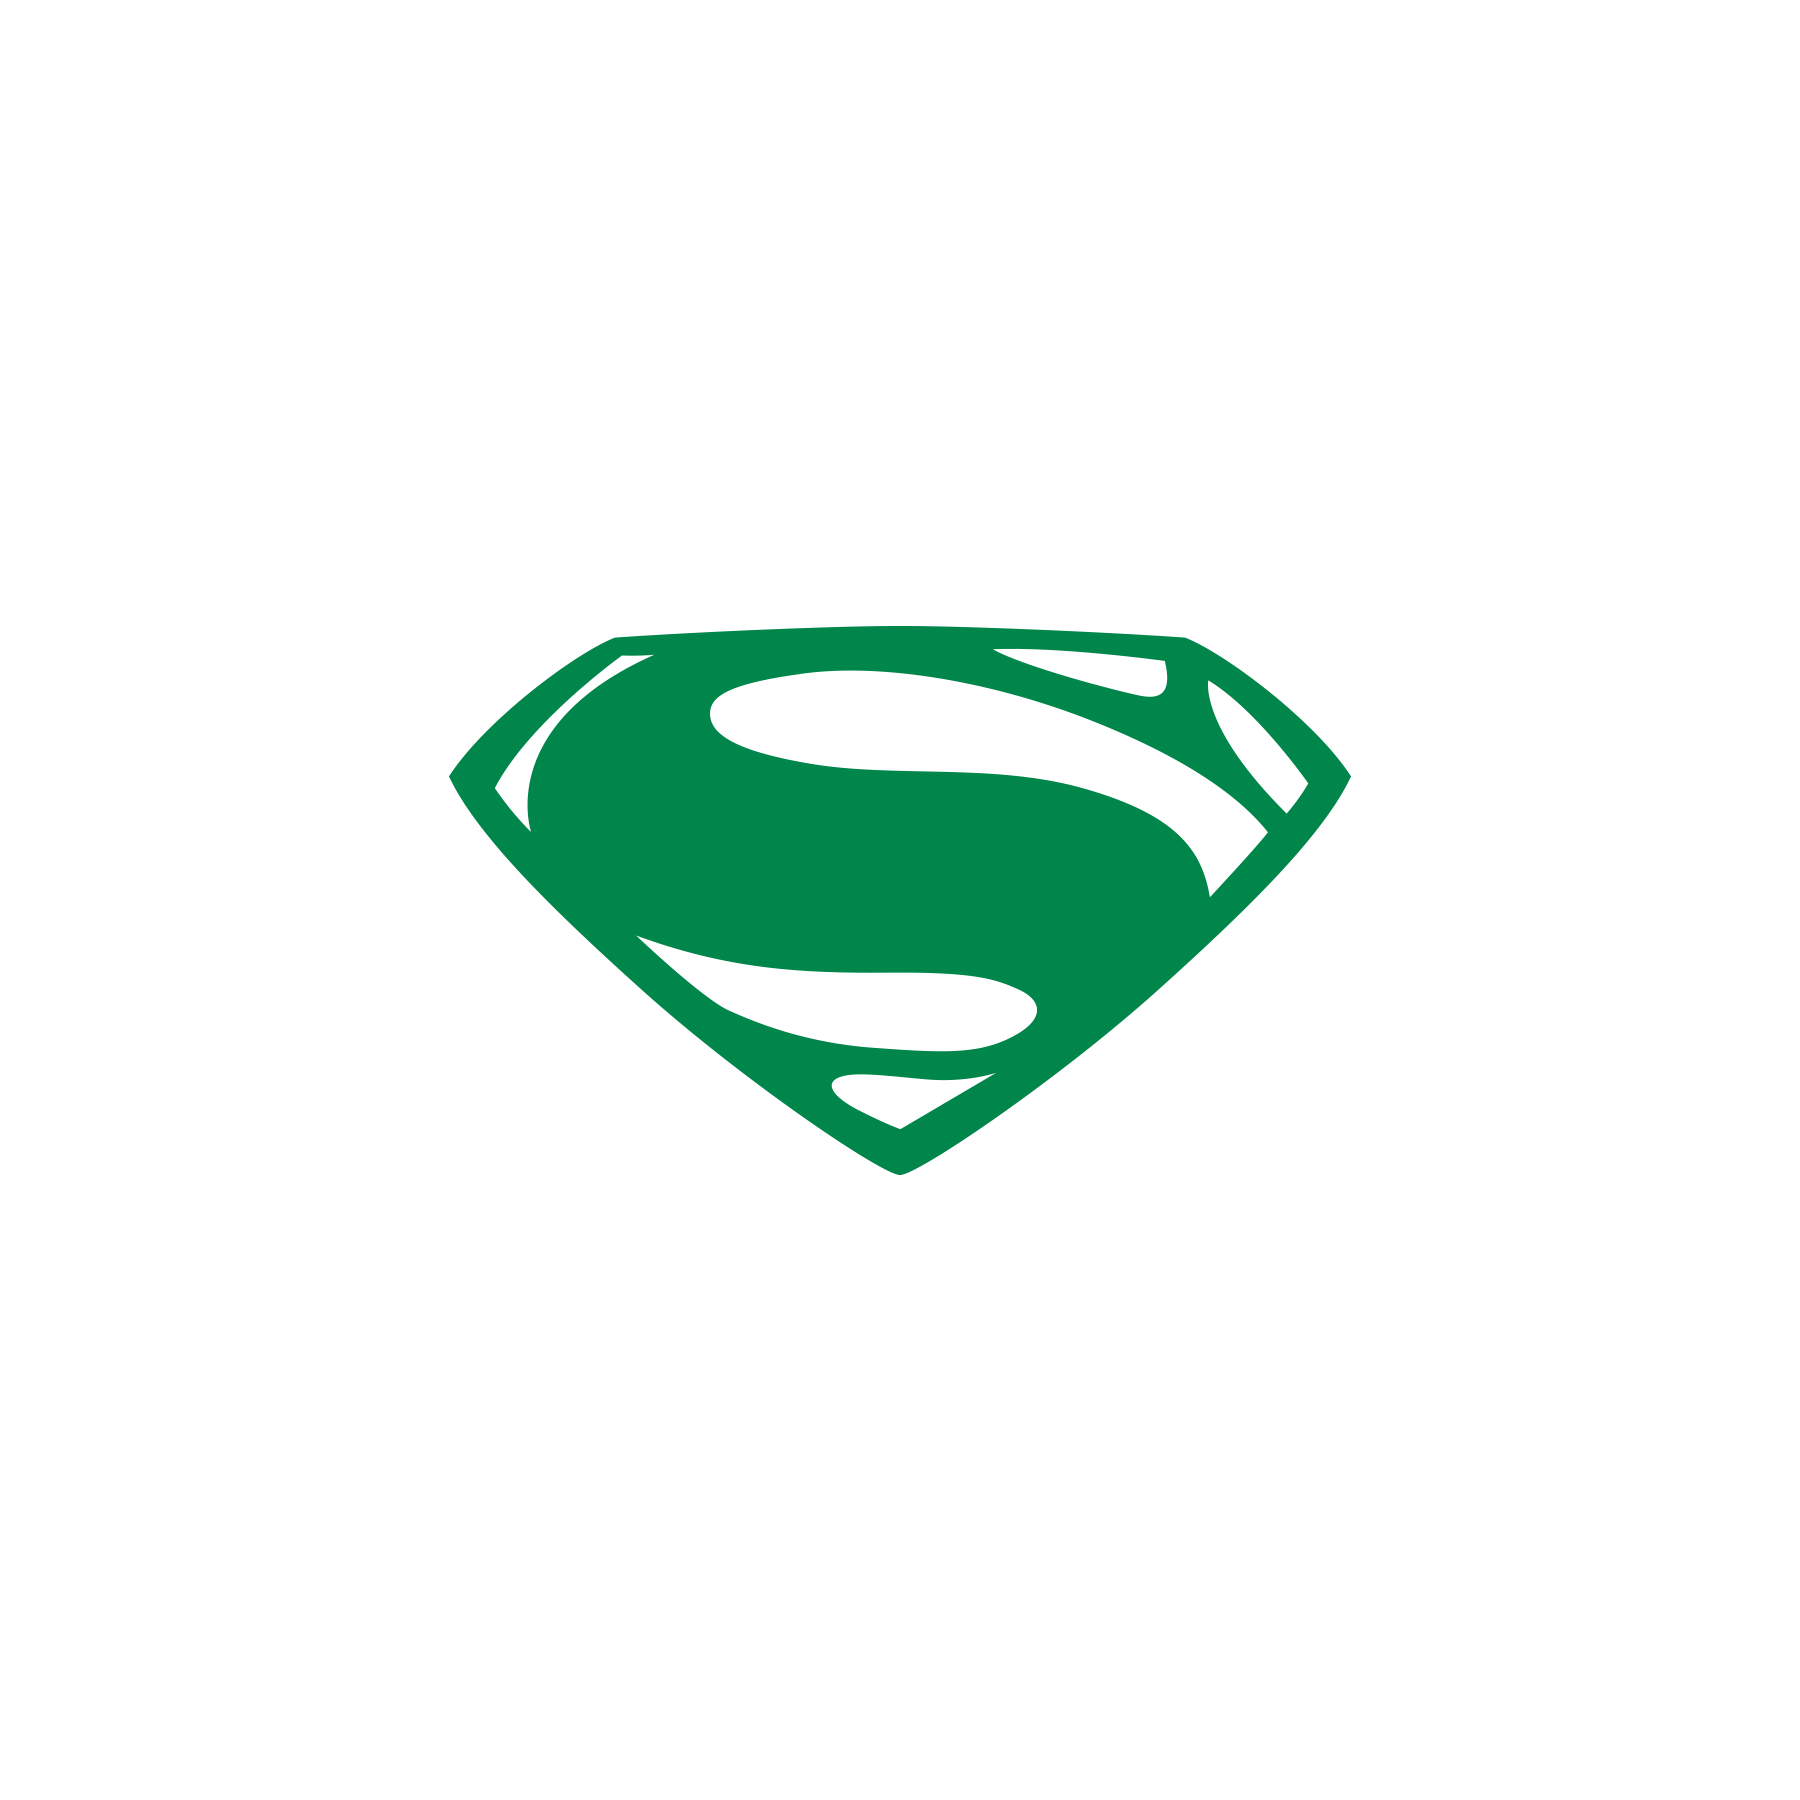 Download Superman Logo Png Free Transparent Png Logos - Superman Logo Dean  Cain - Full Size PNG Image - PNGkit